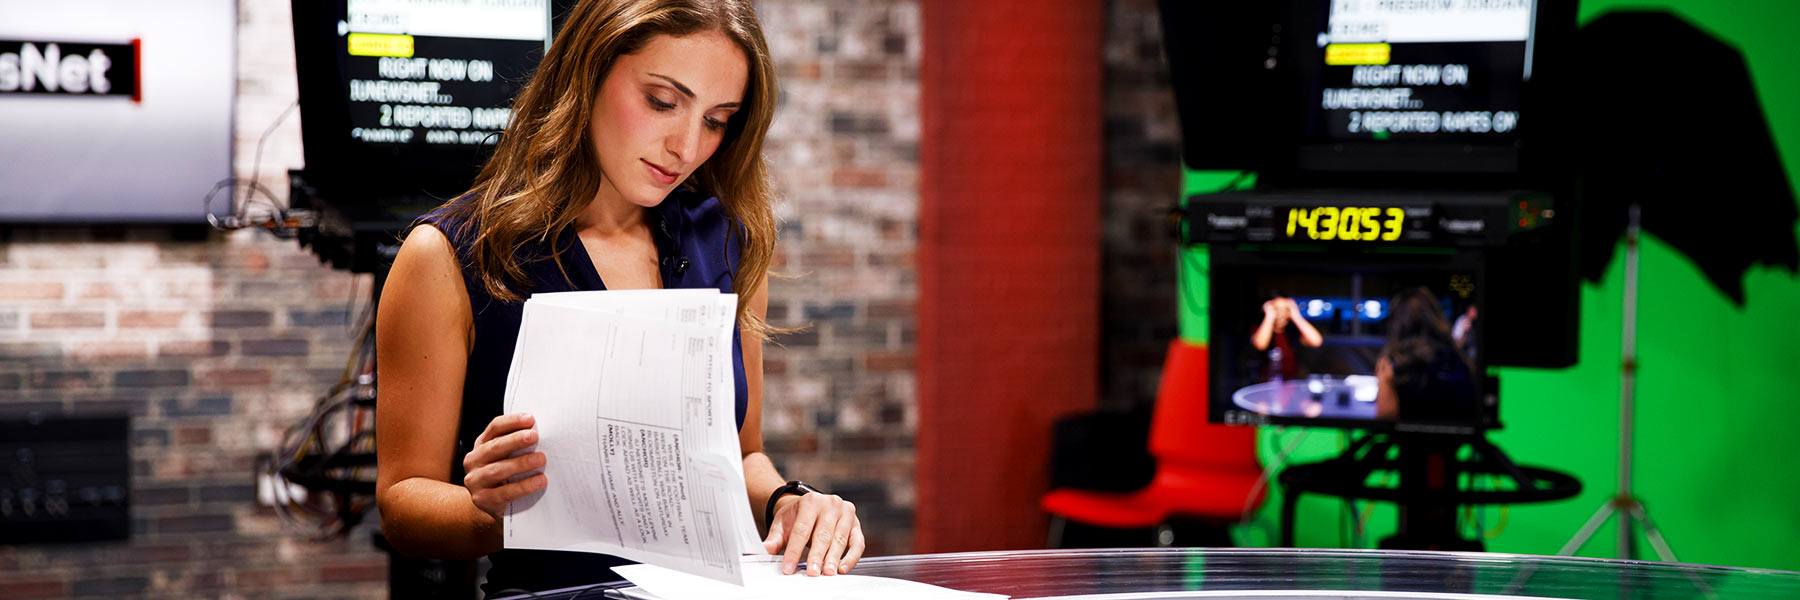 A student reporter looks at a script in a TV studio.